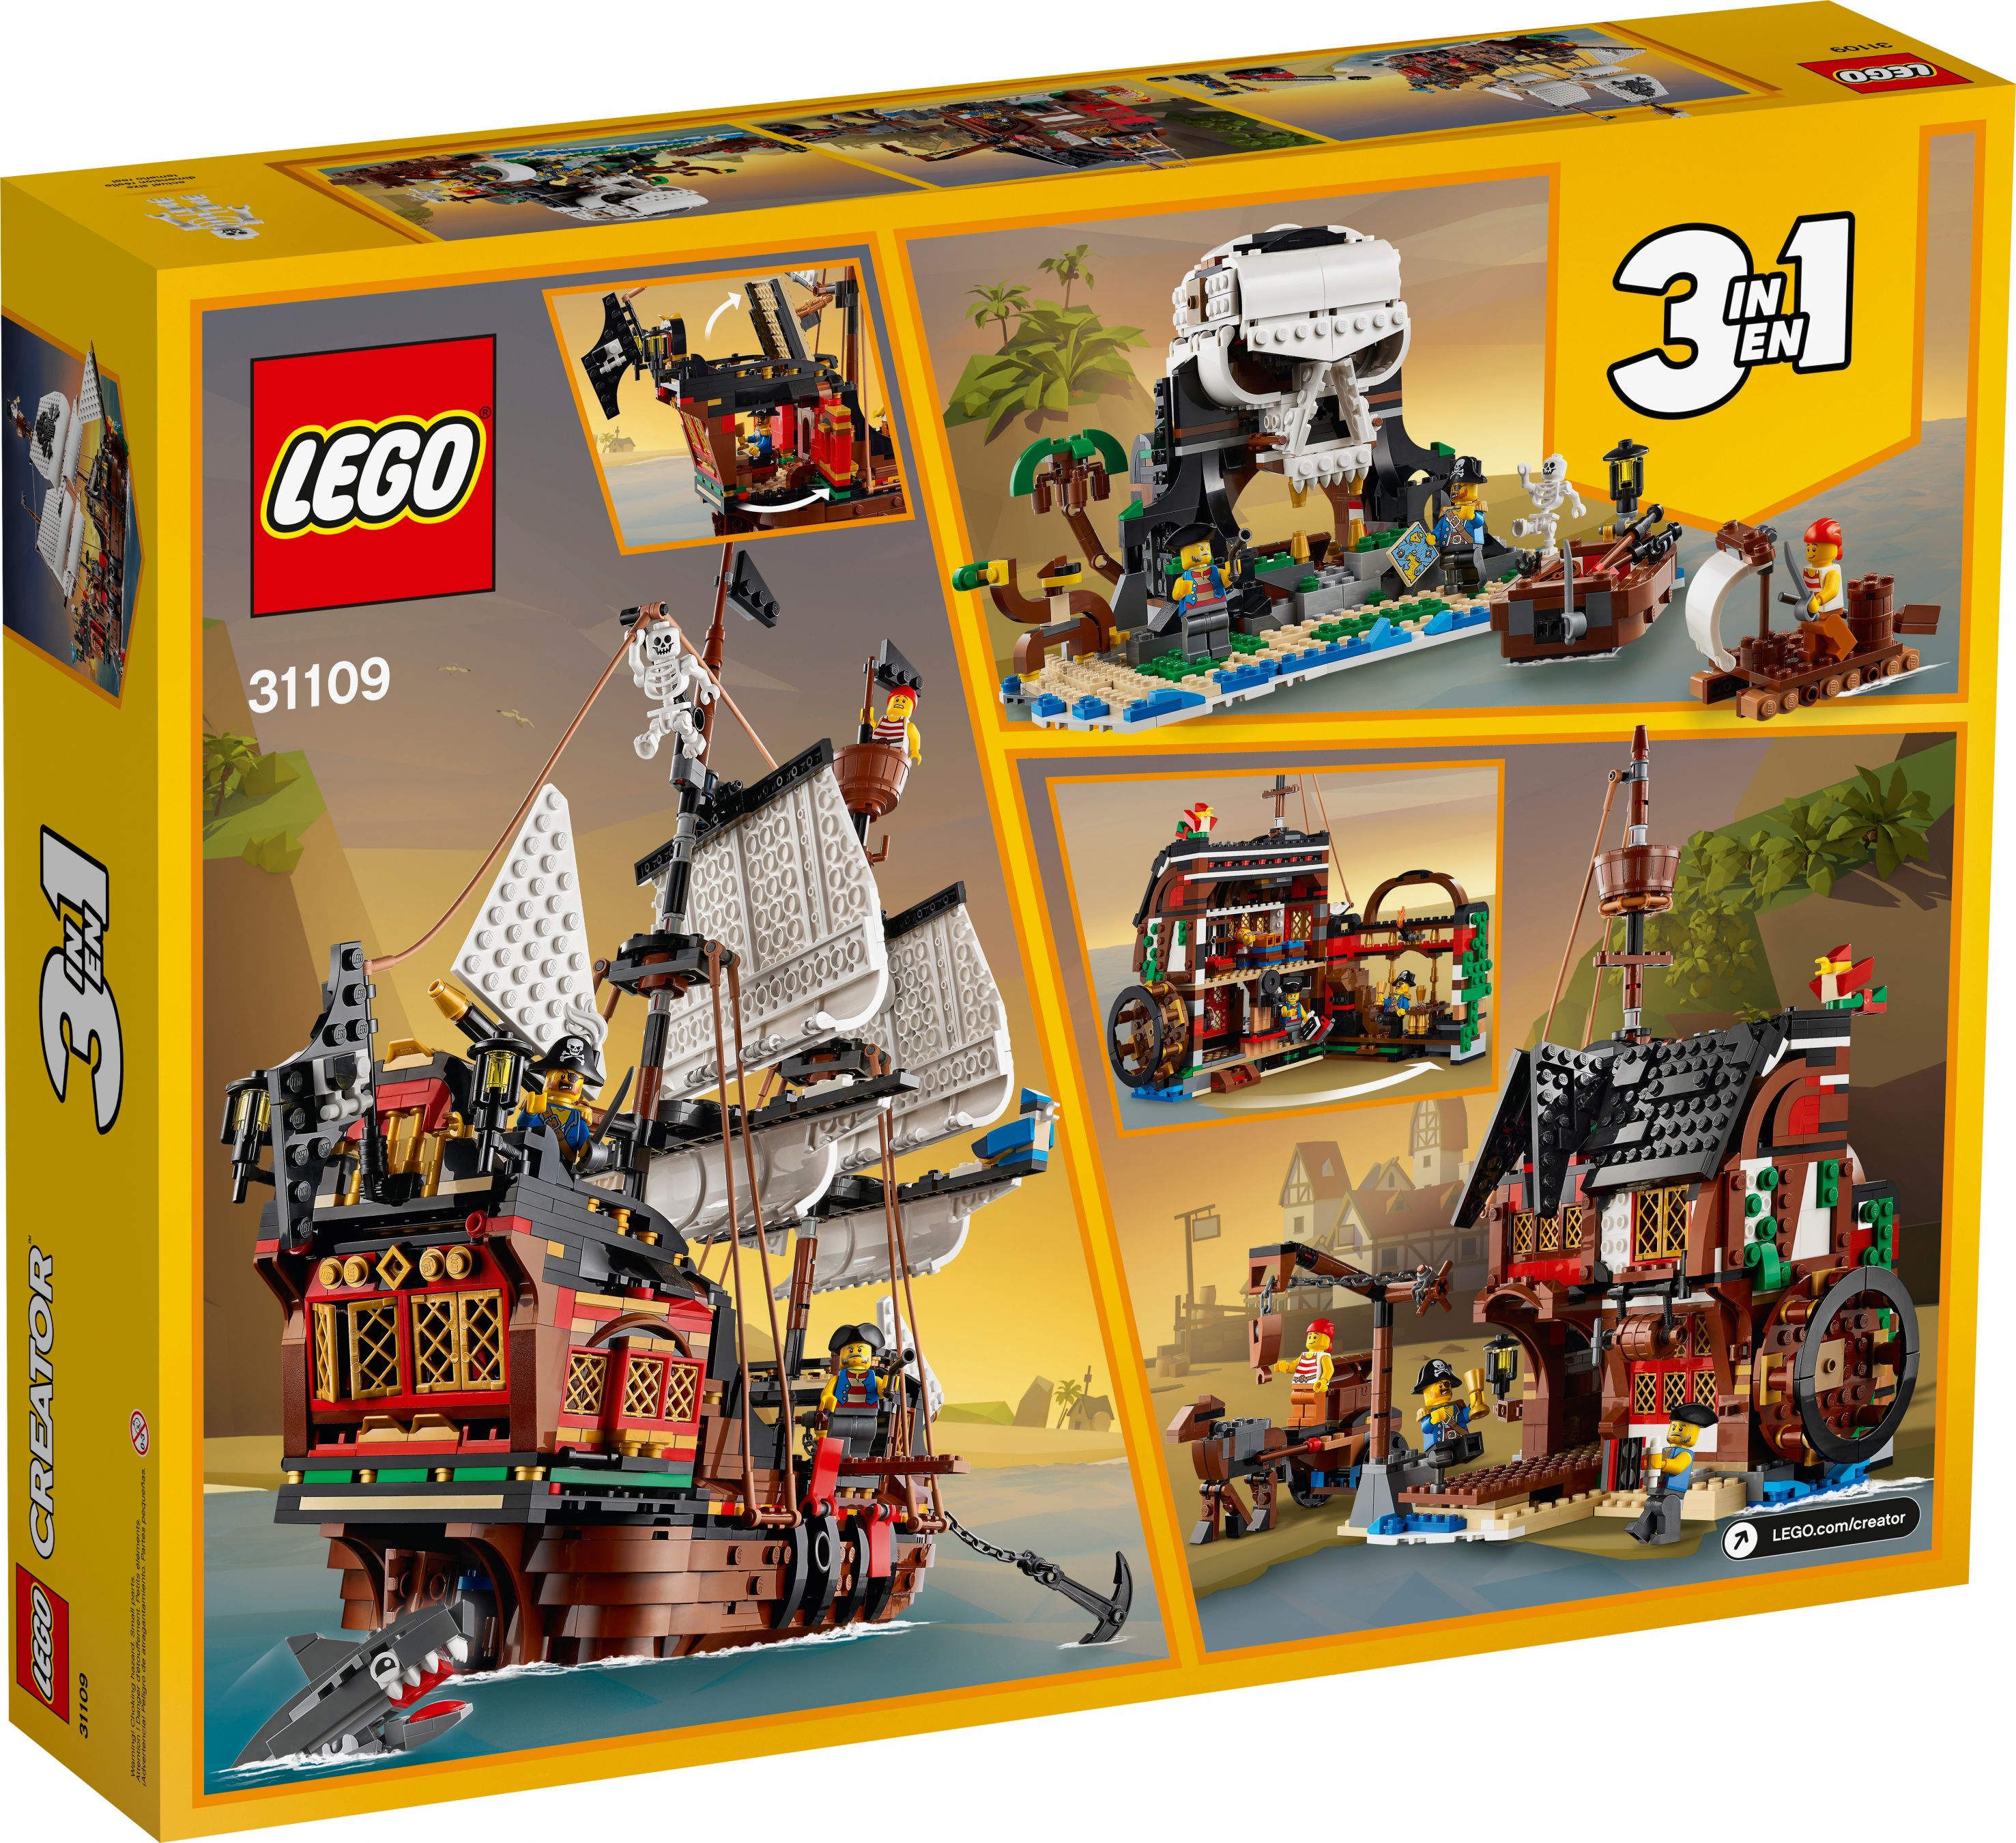 LEGO Creator 31109 Piratenschiff LEGO_31109_alt9.jpg